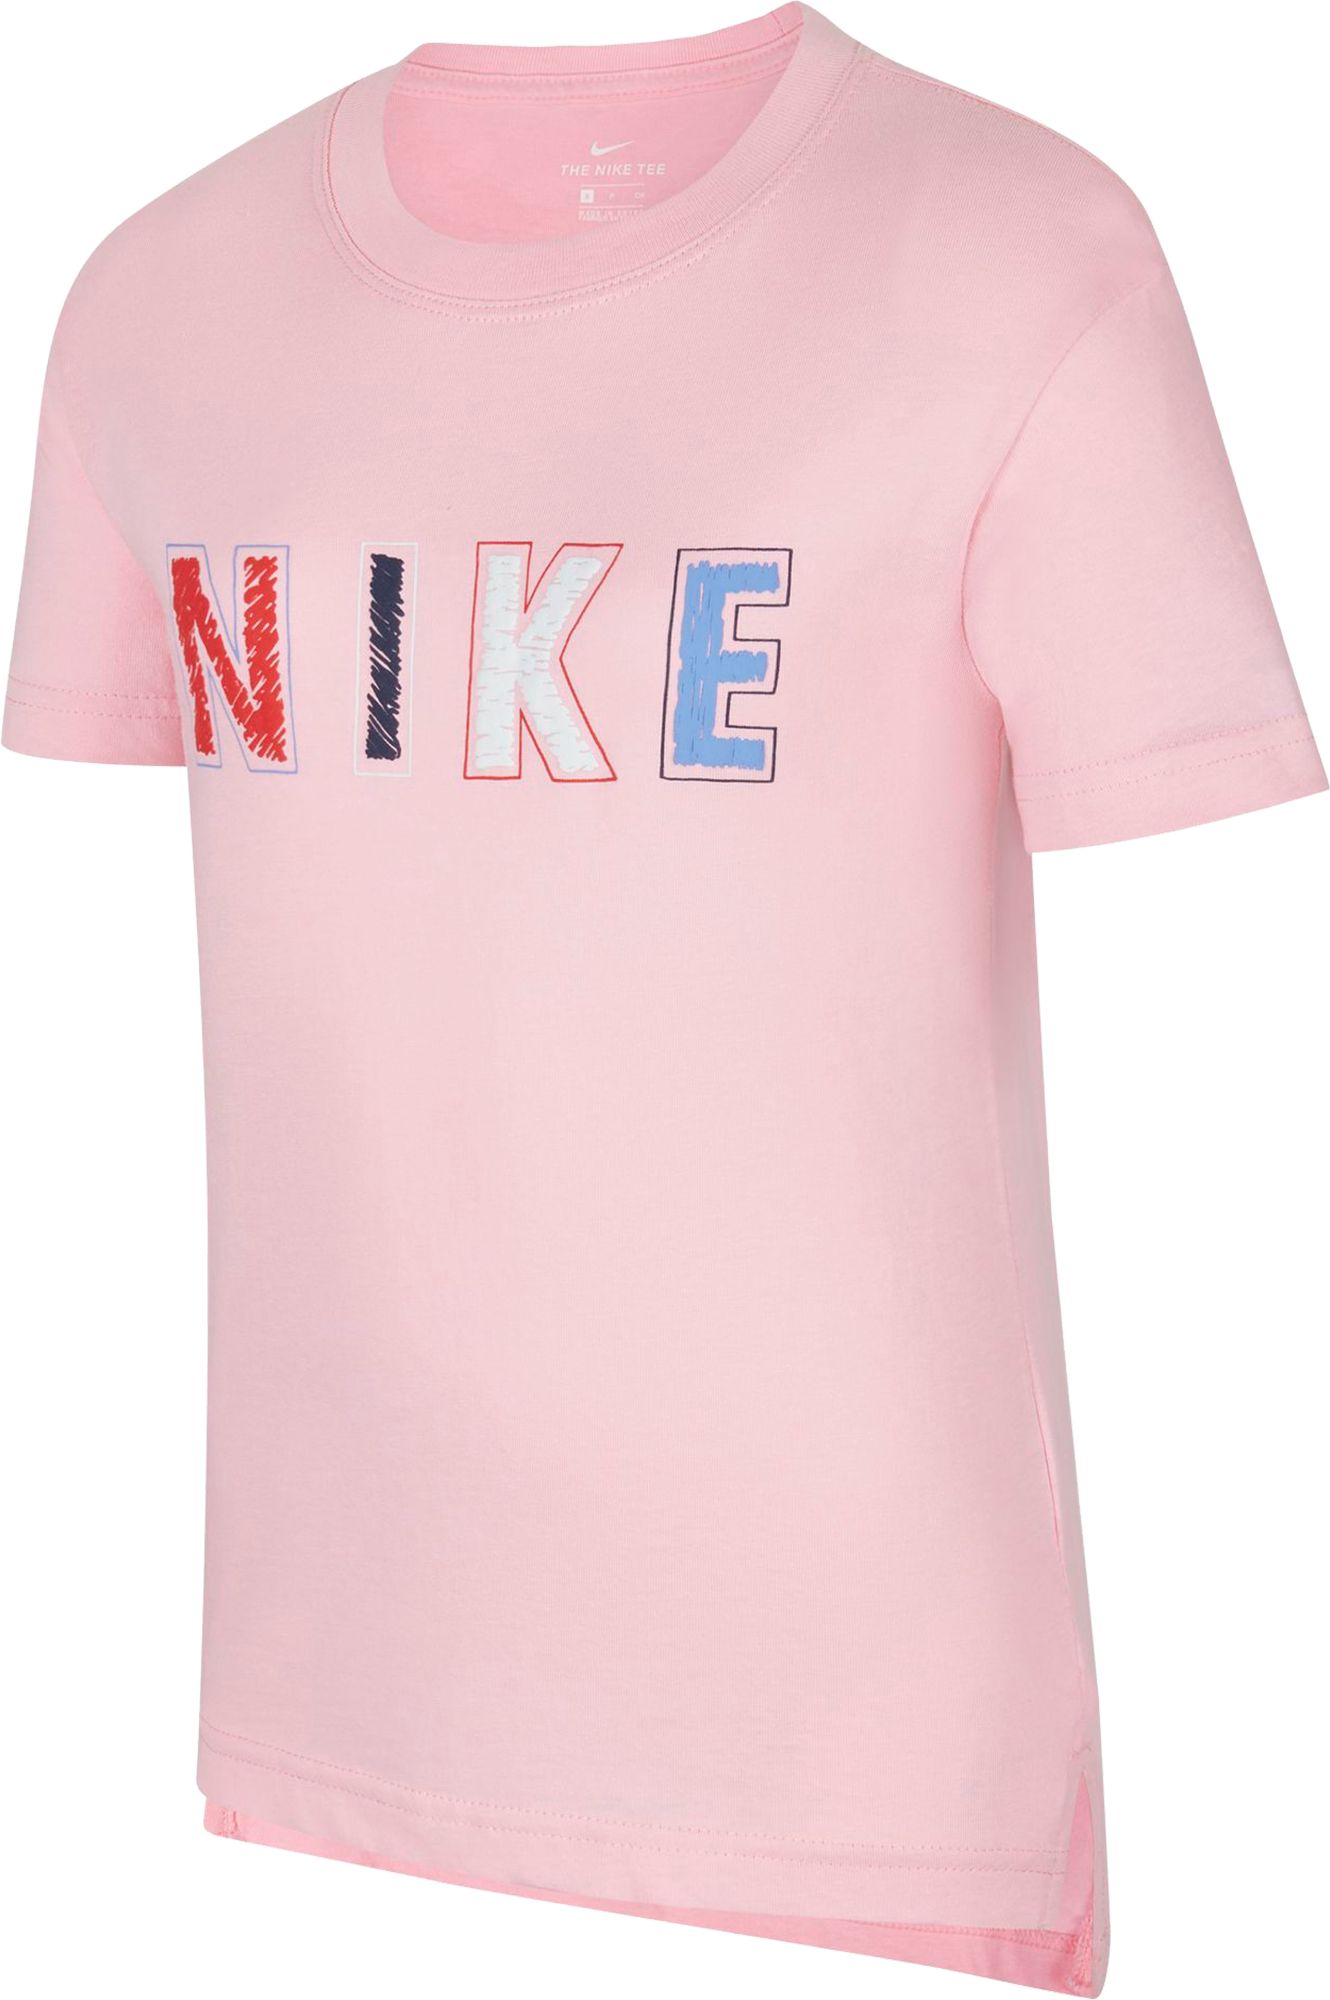 nike t shirts for girls